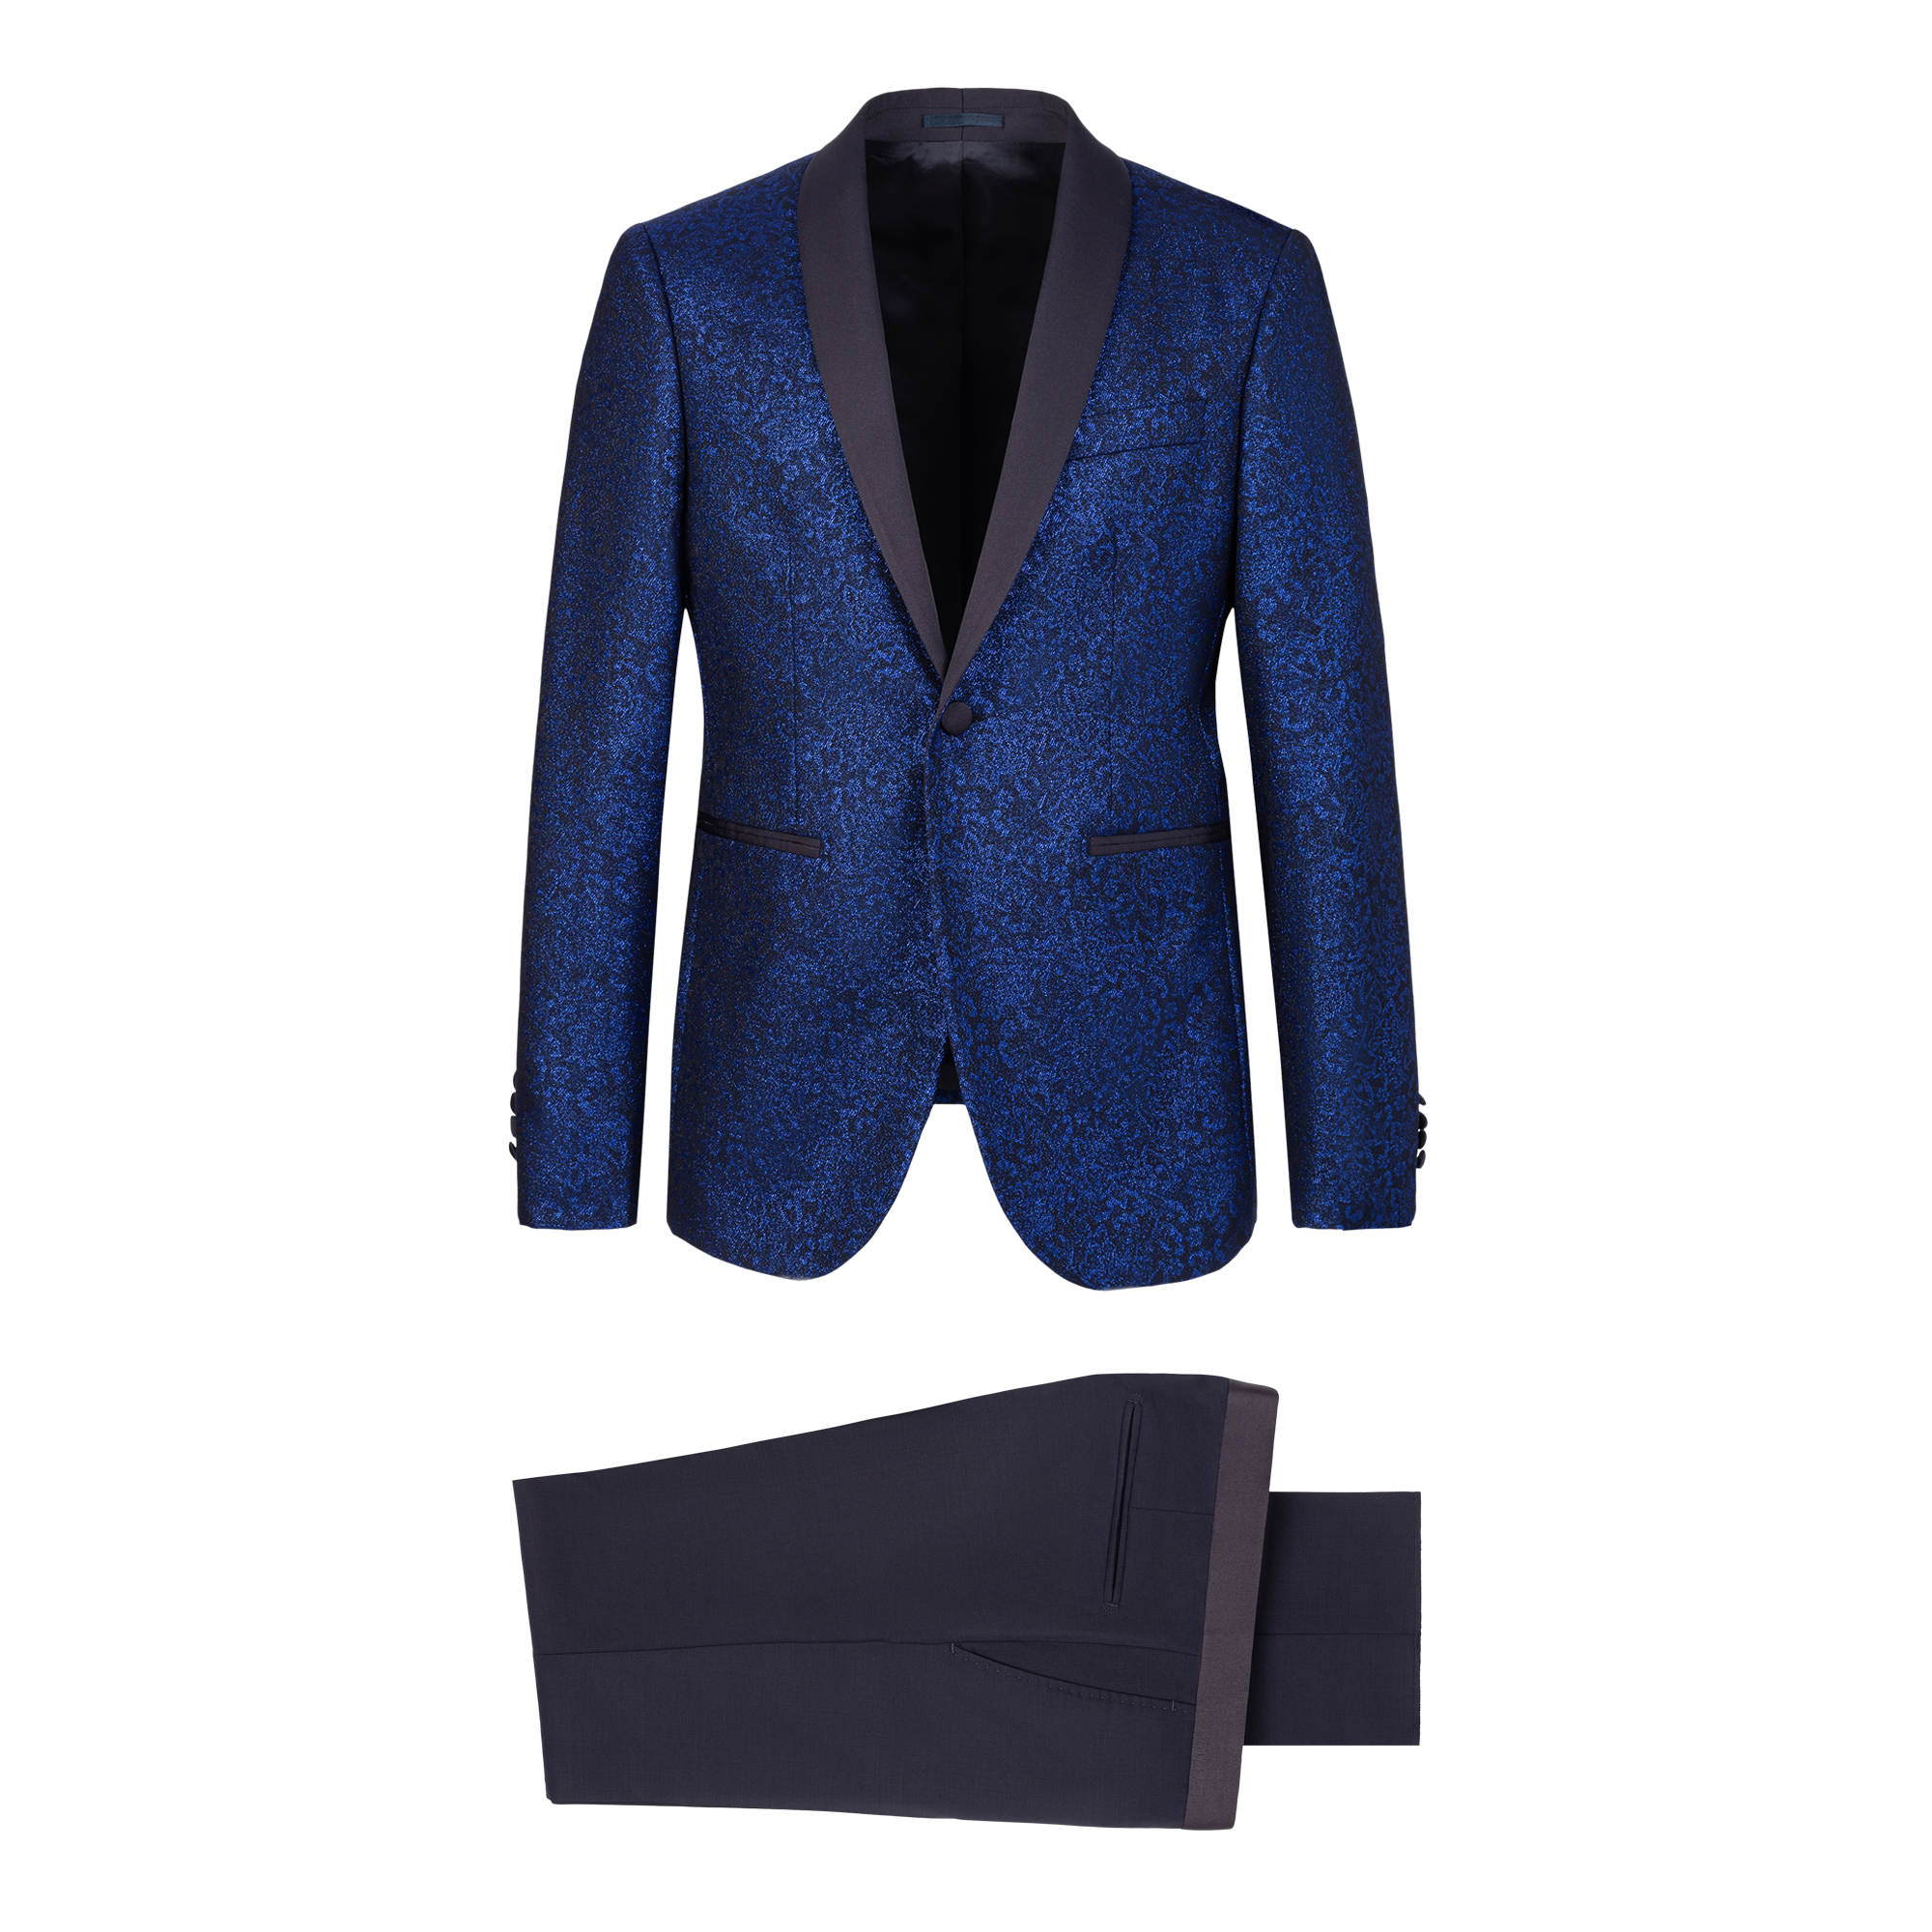 Wedding tuxedo suit blue